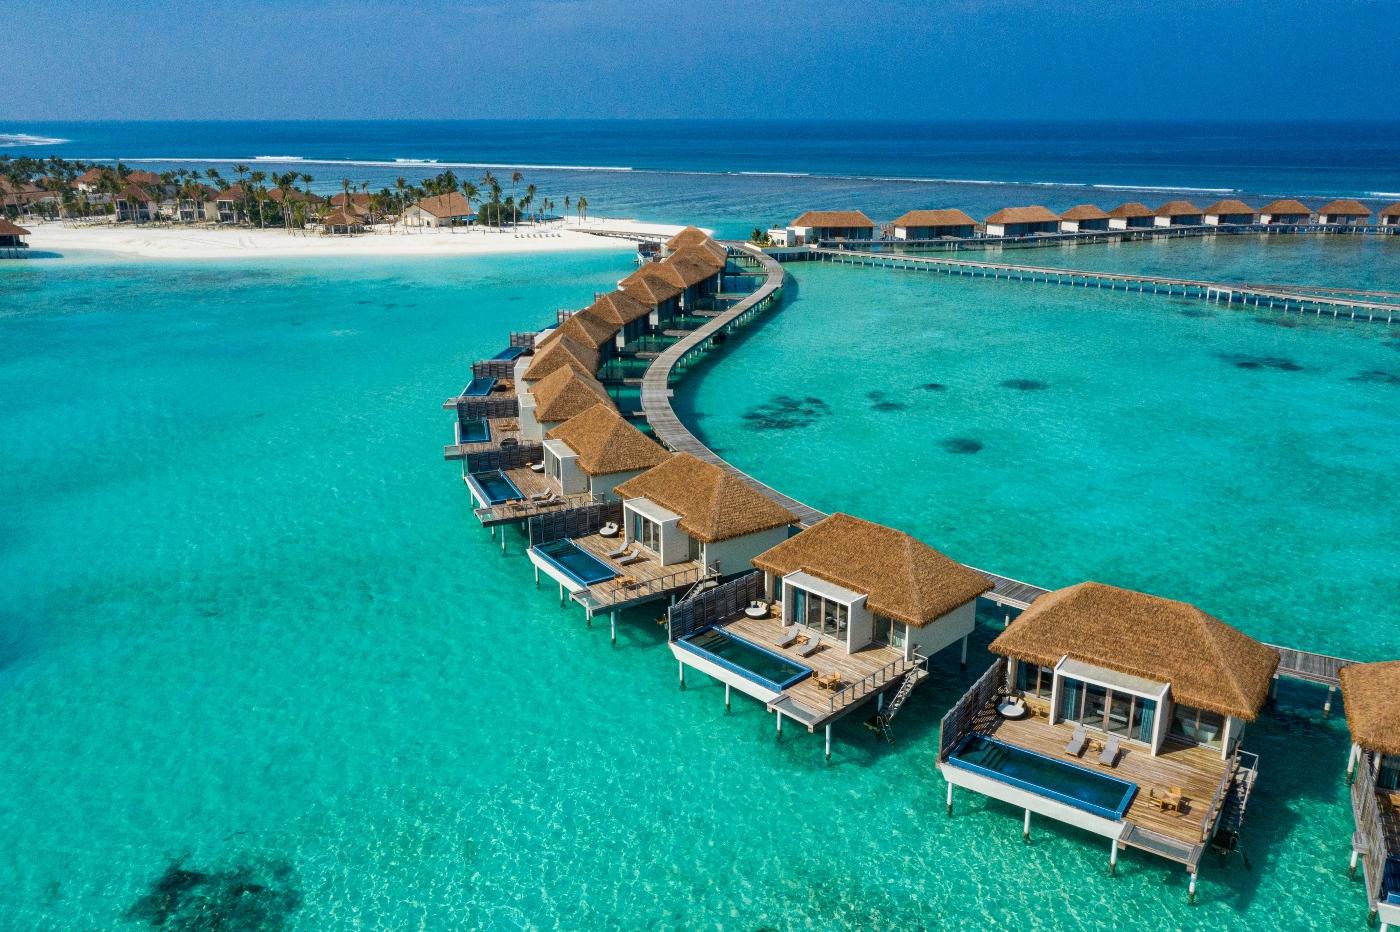 Radisson Blu Resort Maldives - Setting the Bar in Luxury Travel ...